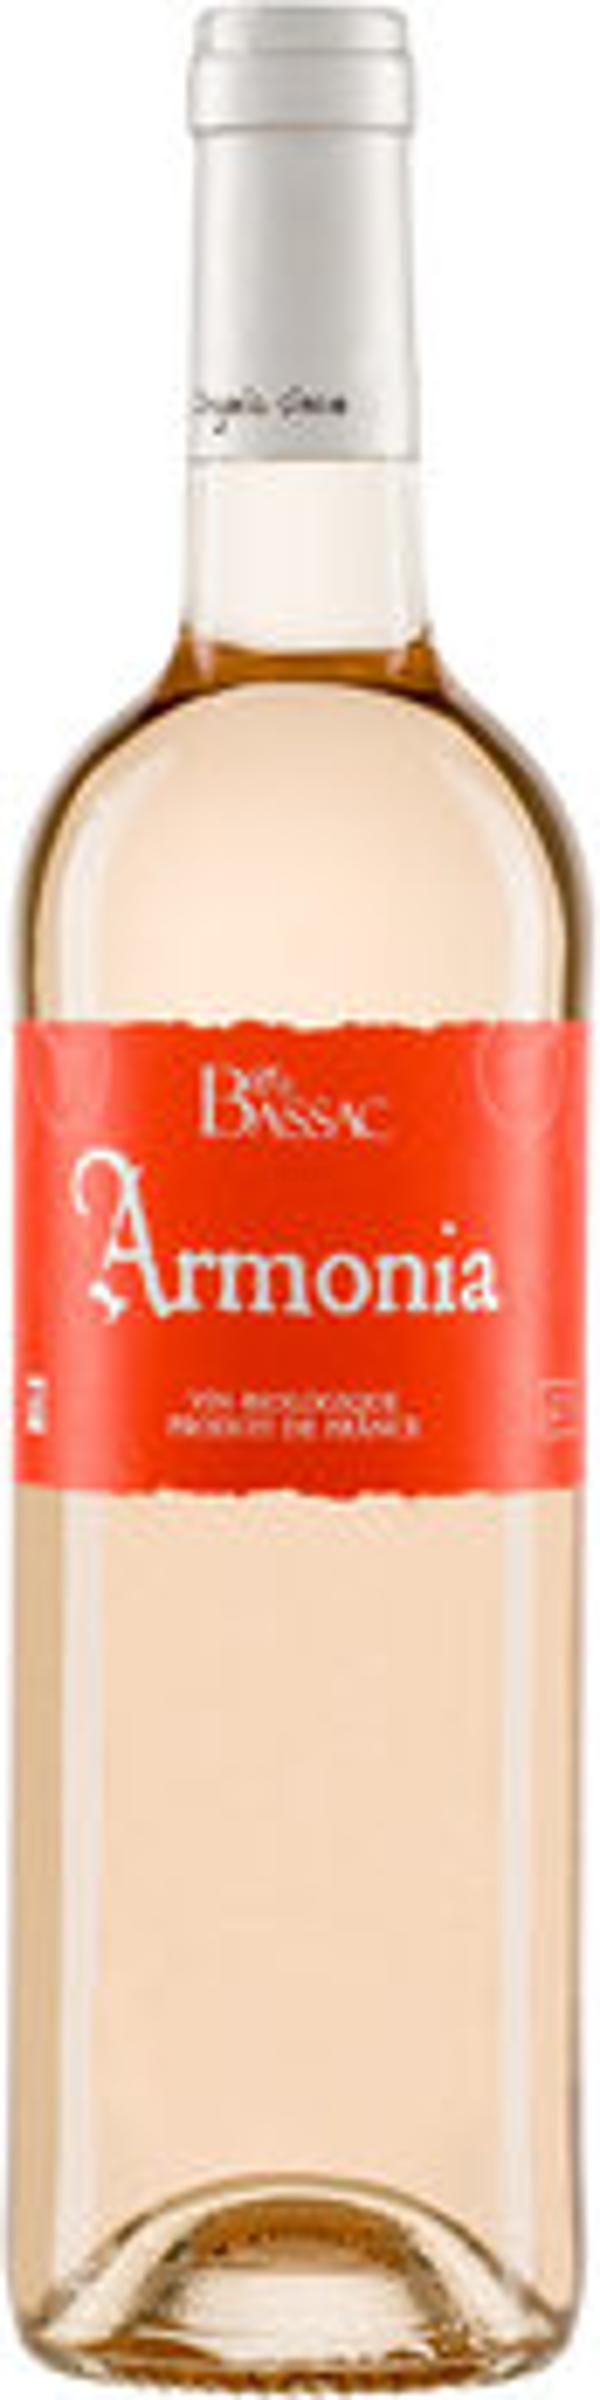 Produktfoto zu Armonia Rosé Bassac, Rosewein trocken 0,75l